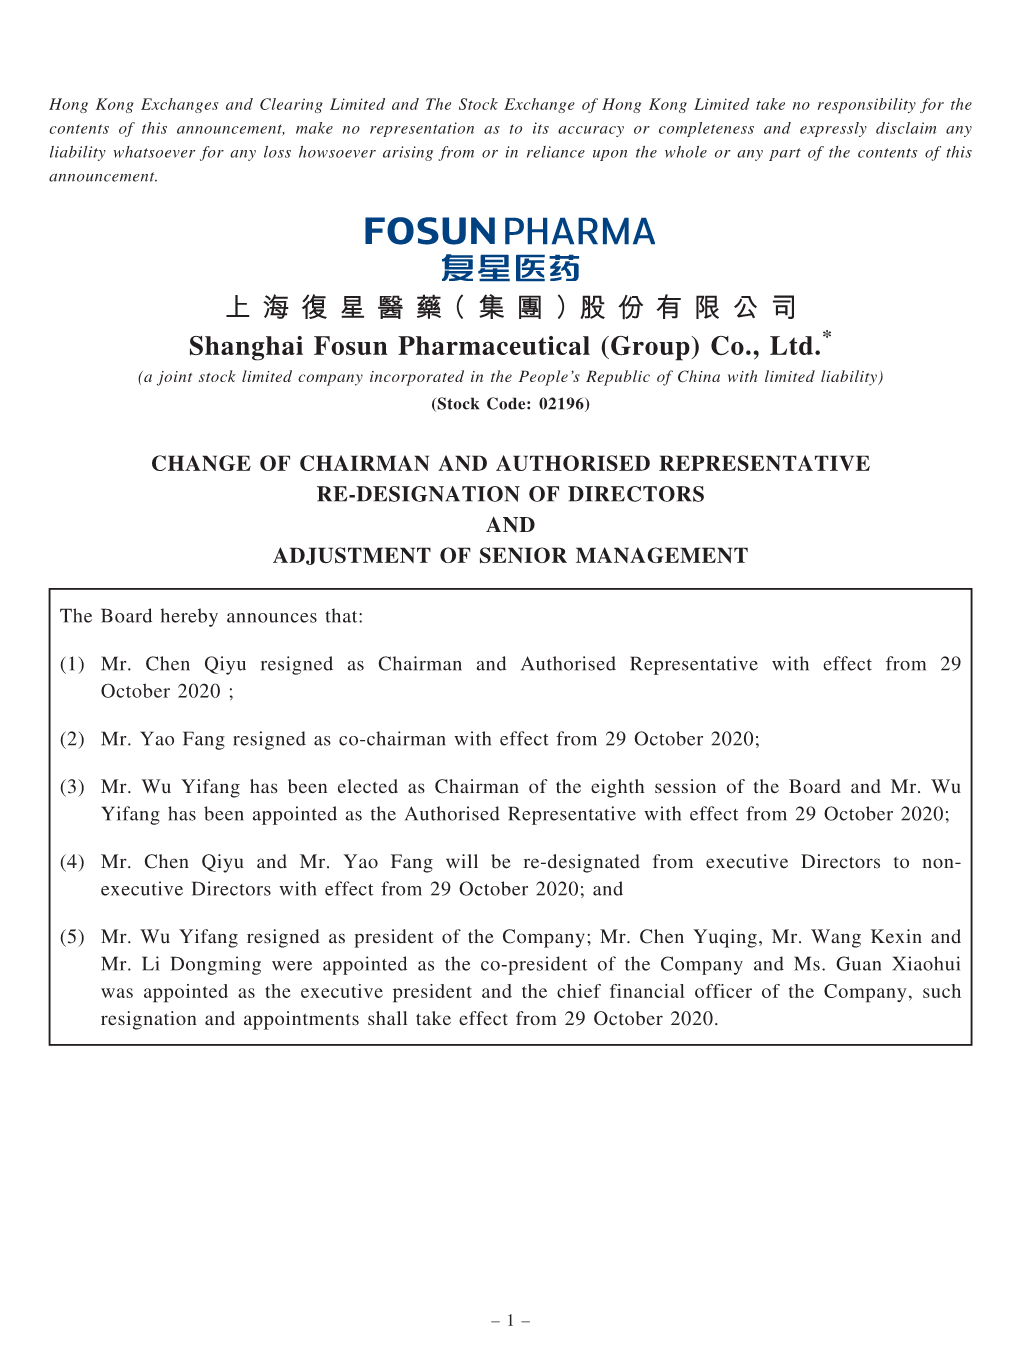 Shanghai Fosun Pharmaceutical (Group) Co., Ltd